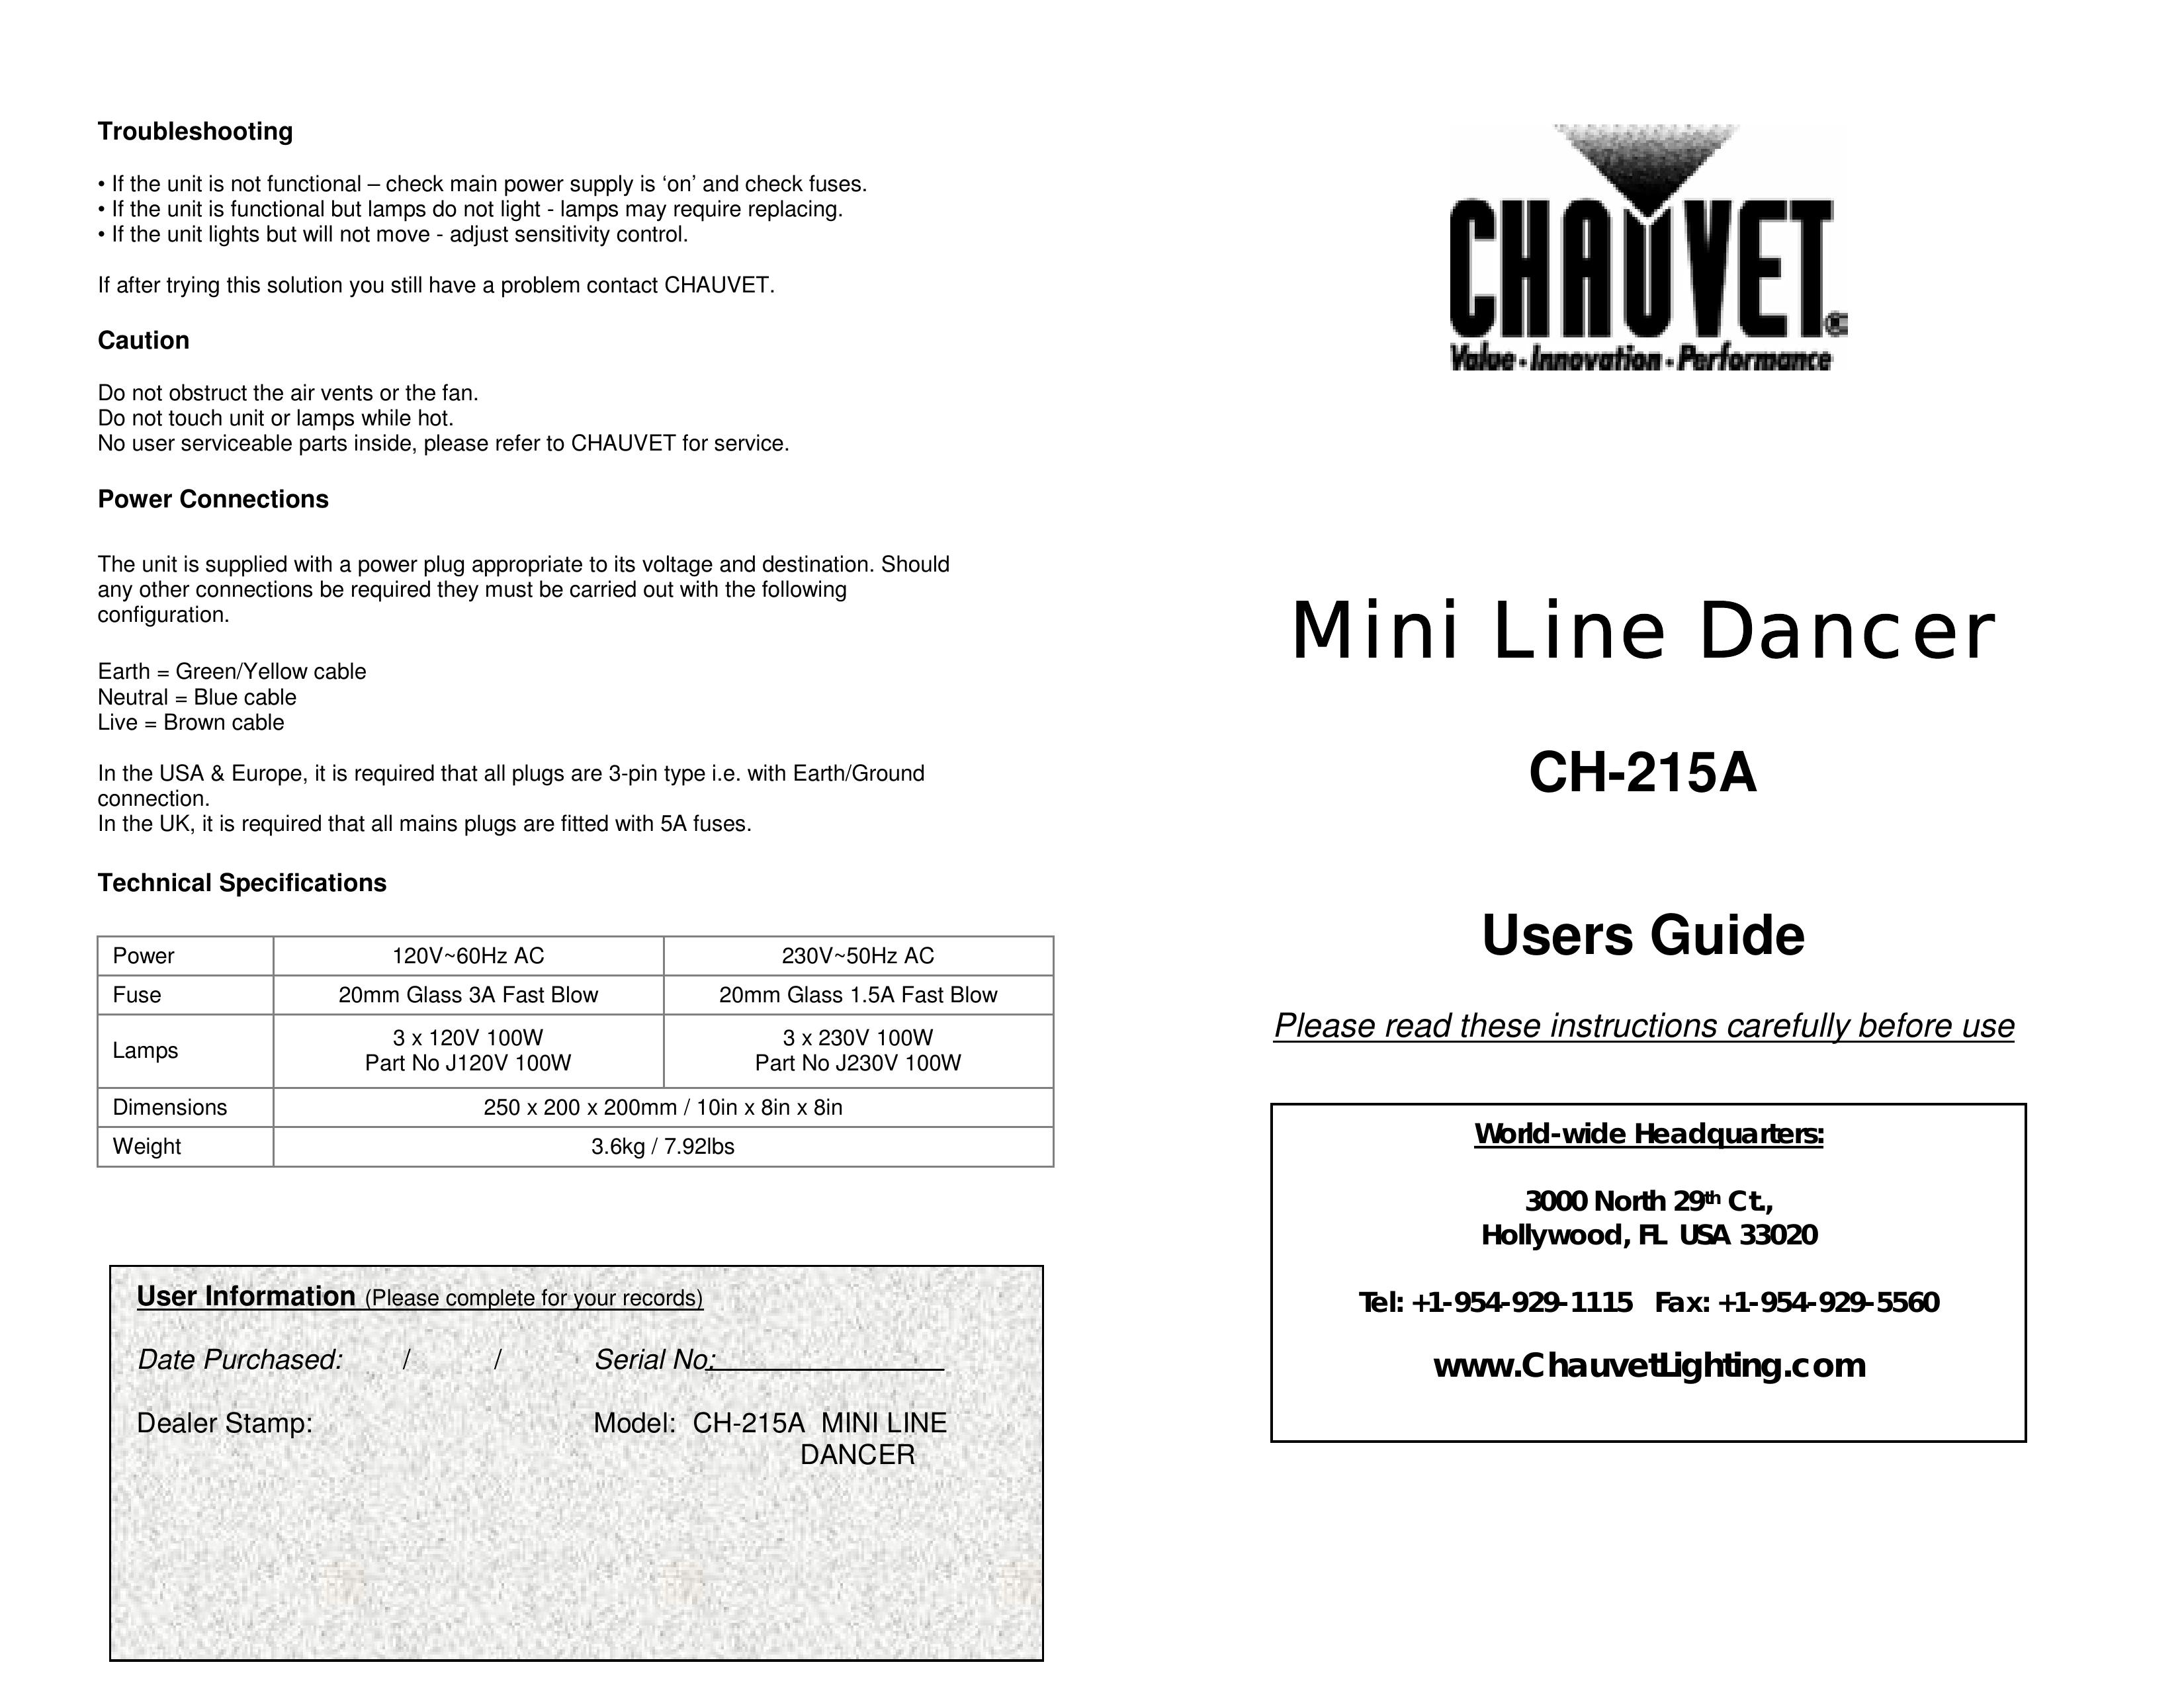 Chauvet Ch 215a Musical Instrument User Manual